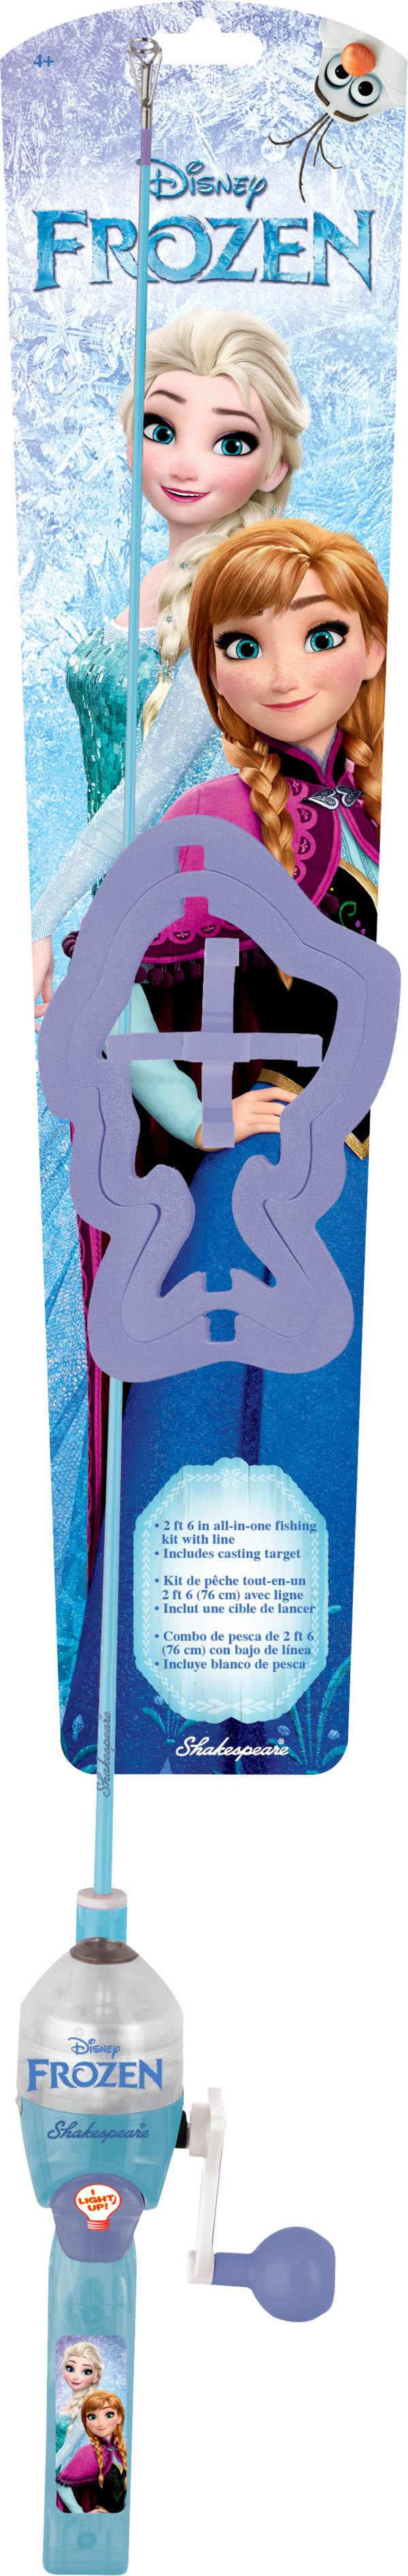 Shakespeare Disney Frozen Lighted Spincast Combo Kit product image